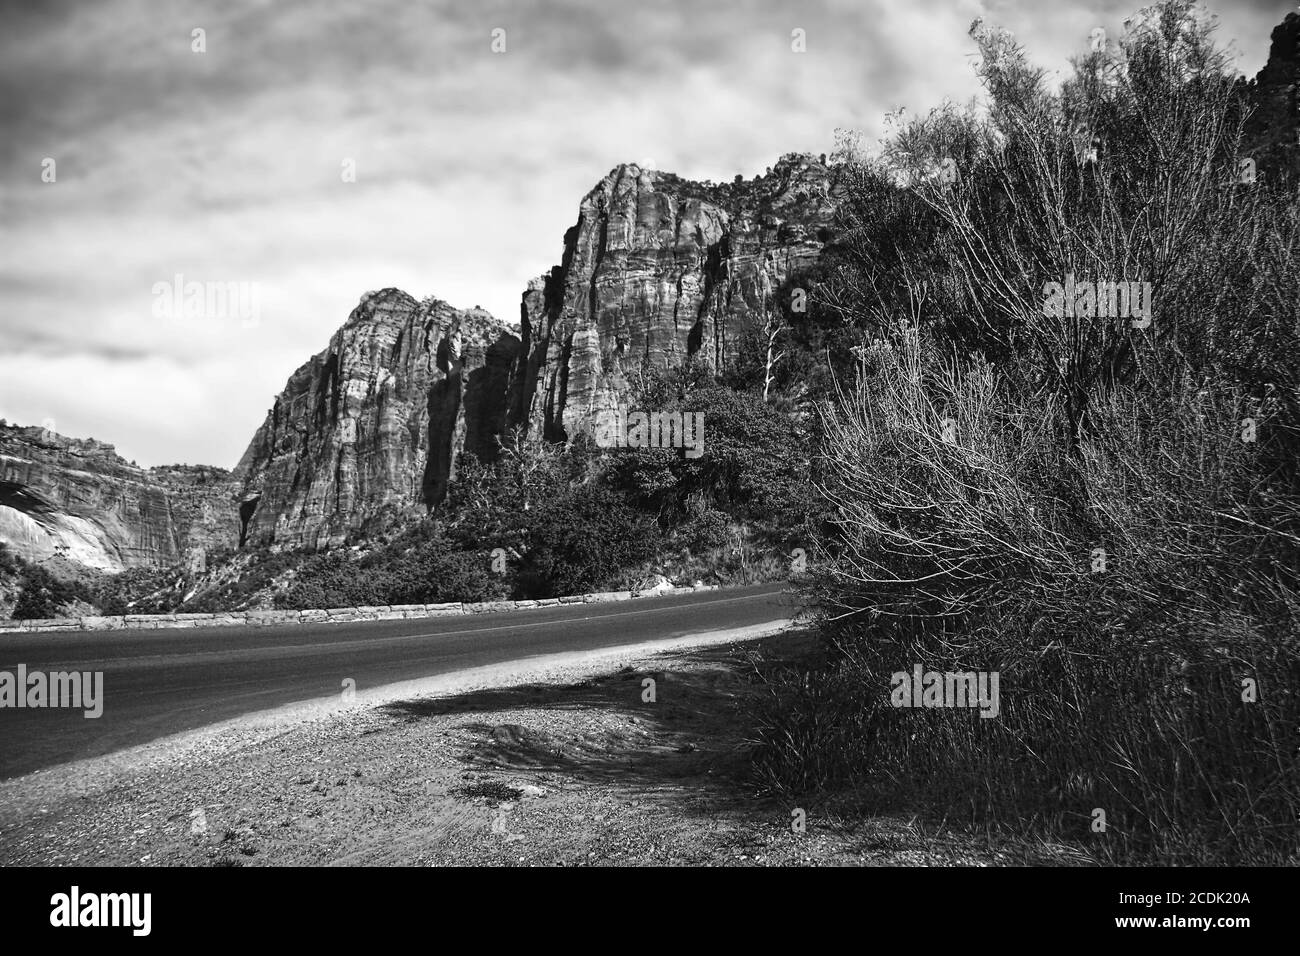 Hänge des Zion Canyon. Utah. USA. Stockfoto